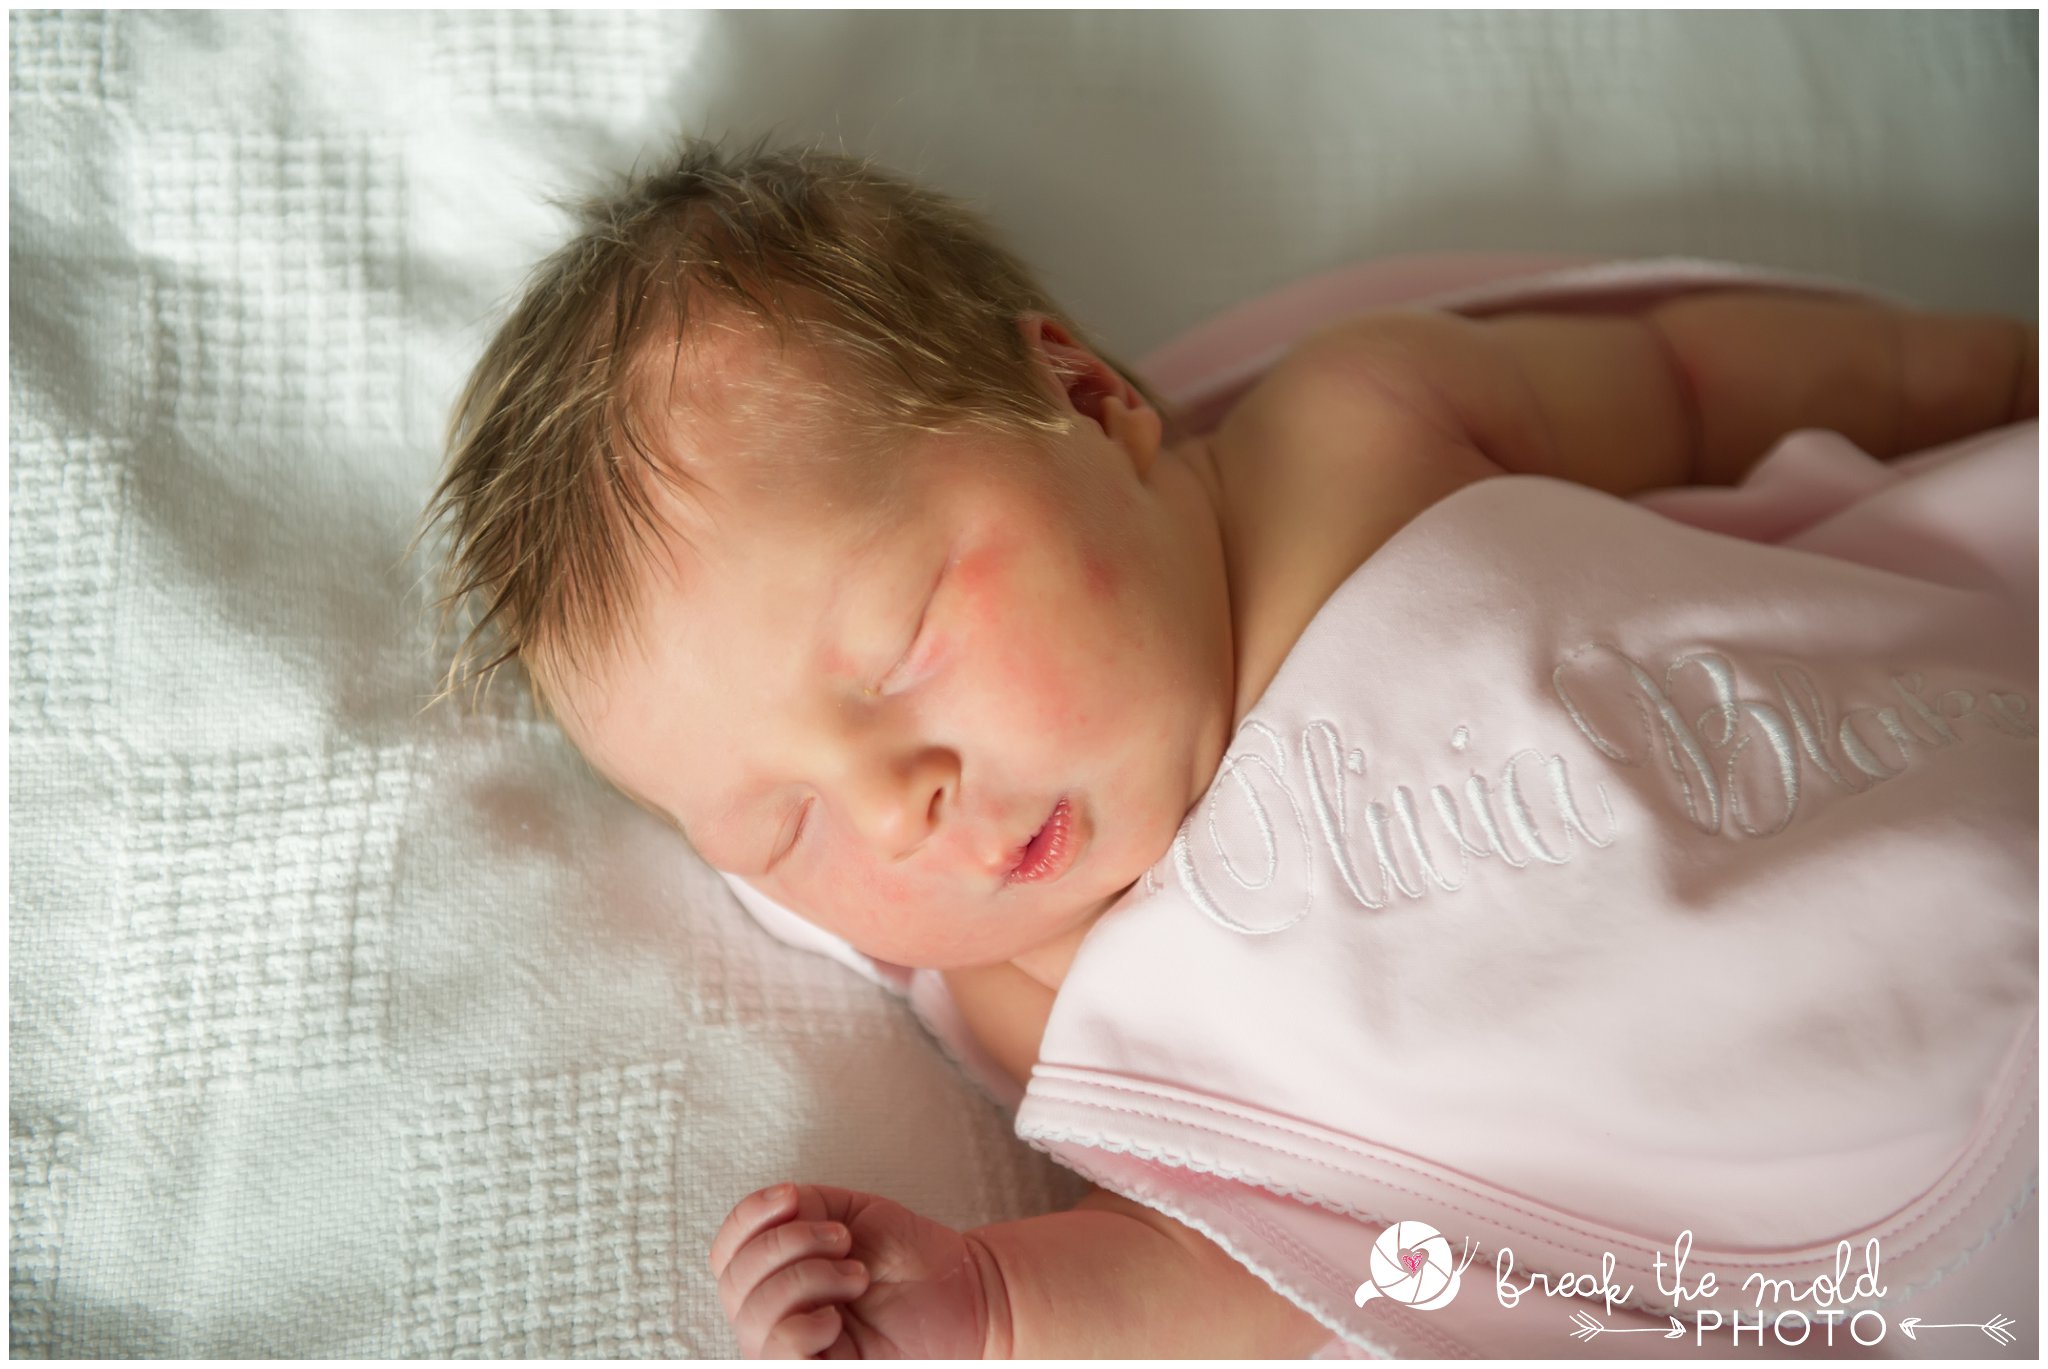 fresh-24-newborn-in-hospital-break-the-mold-photo-baby-girl-sweet-in-room-photos (20).jpg